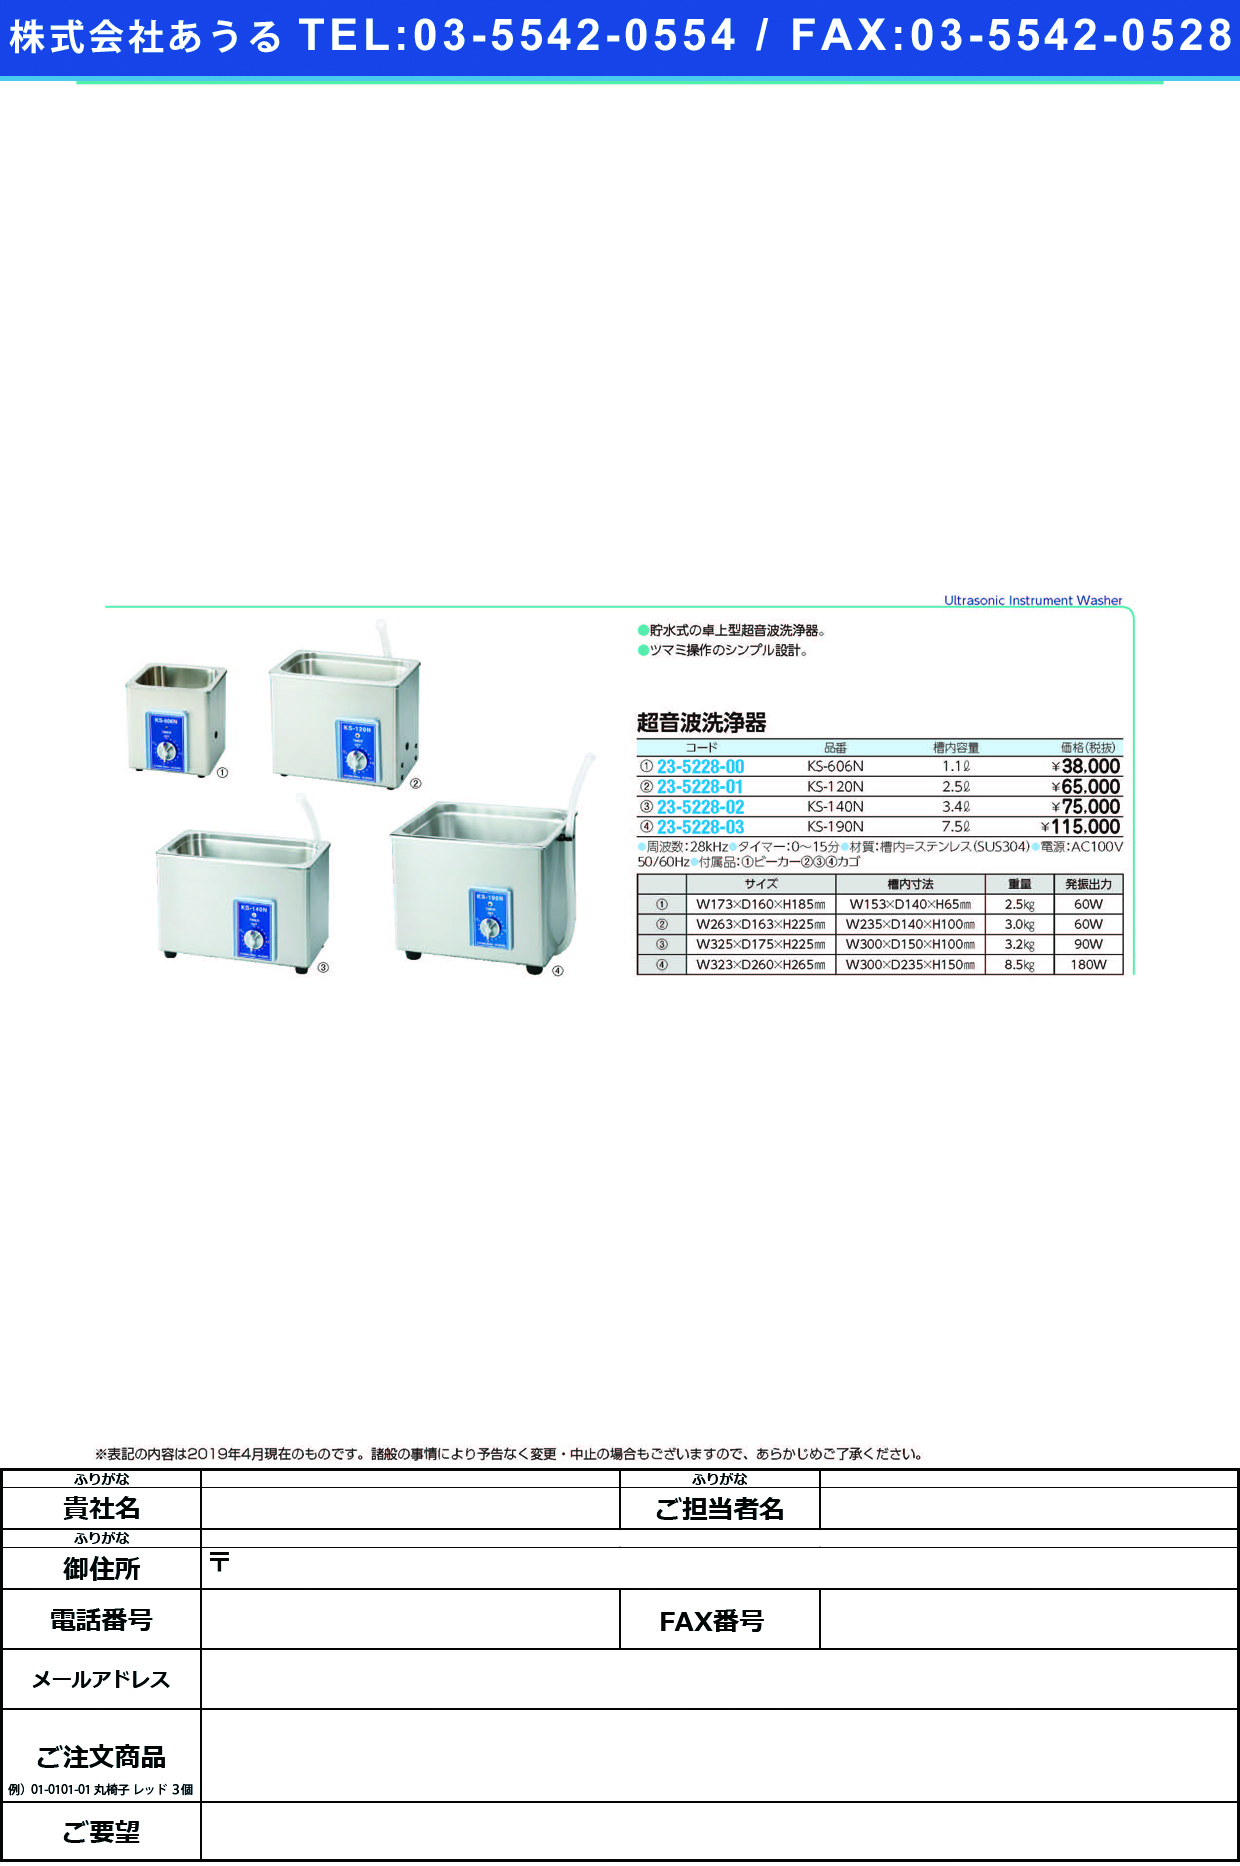 (23-5228-00)超音波洗浄器 KS-606N ﾁｮｳｵﾝﾊﾟｾﾝｼﾞｮｳｷ【1台単位】【2019年カタログ商品】